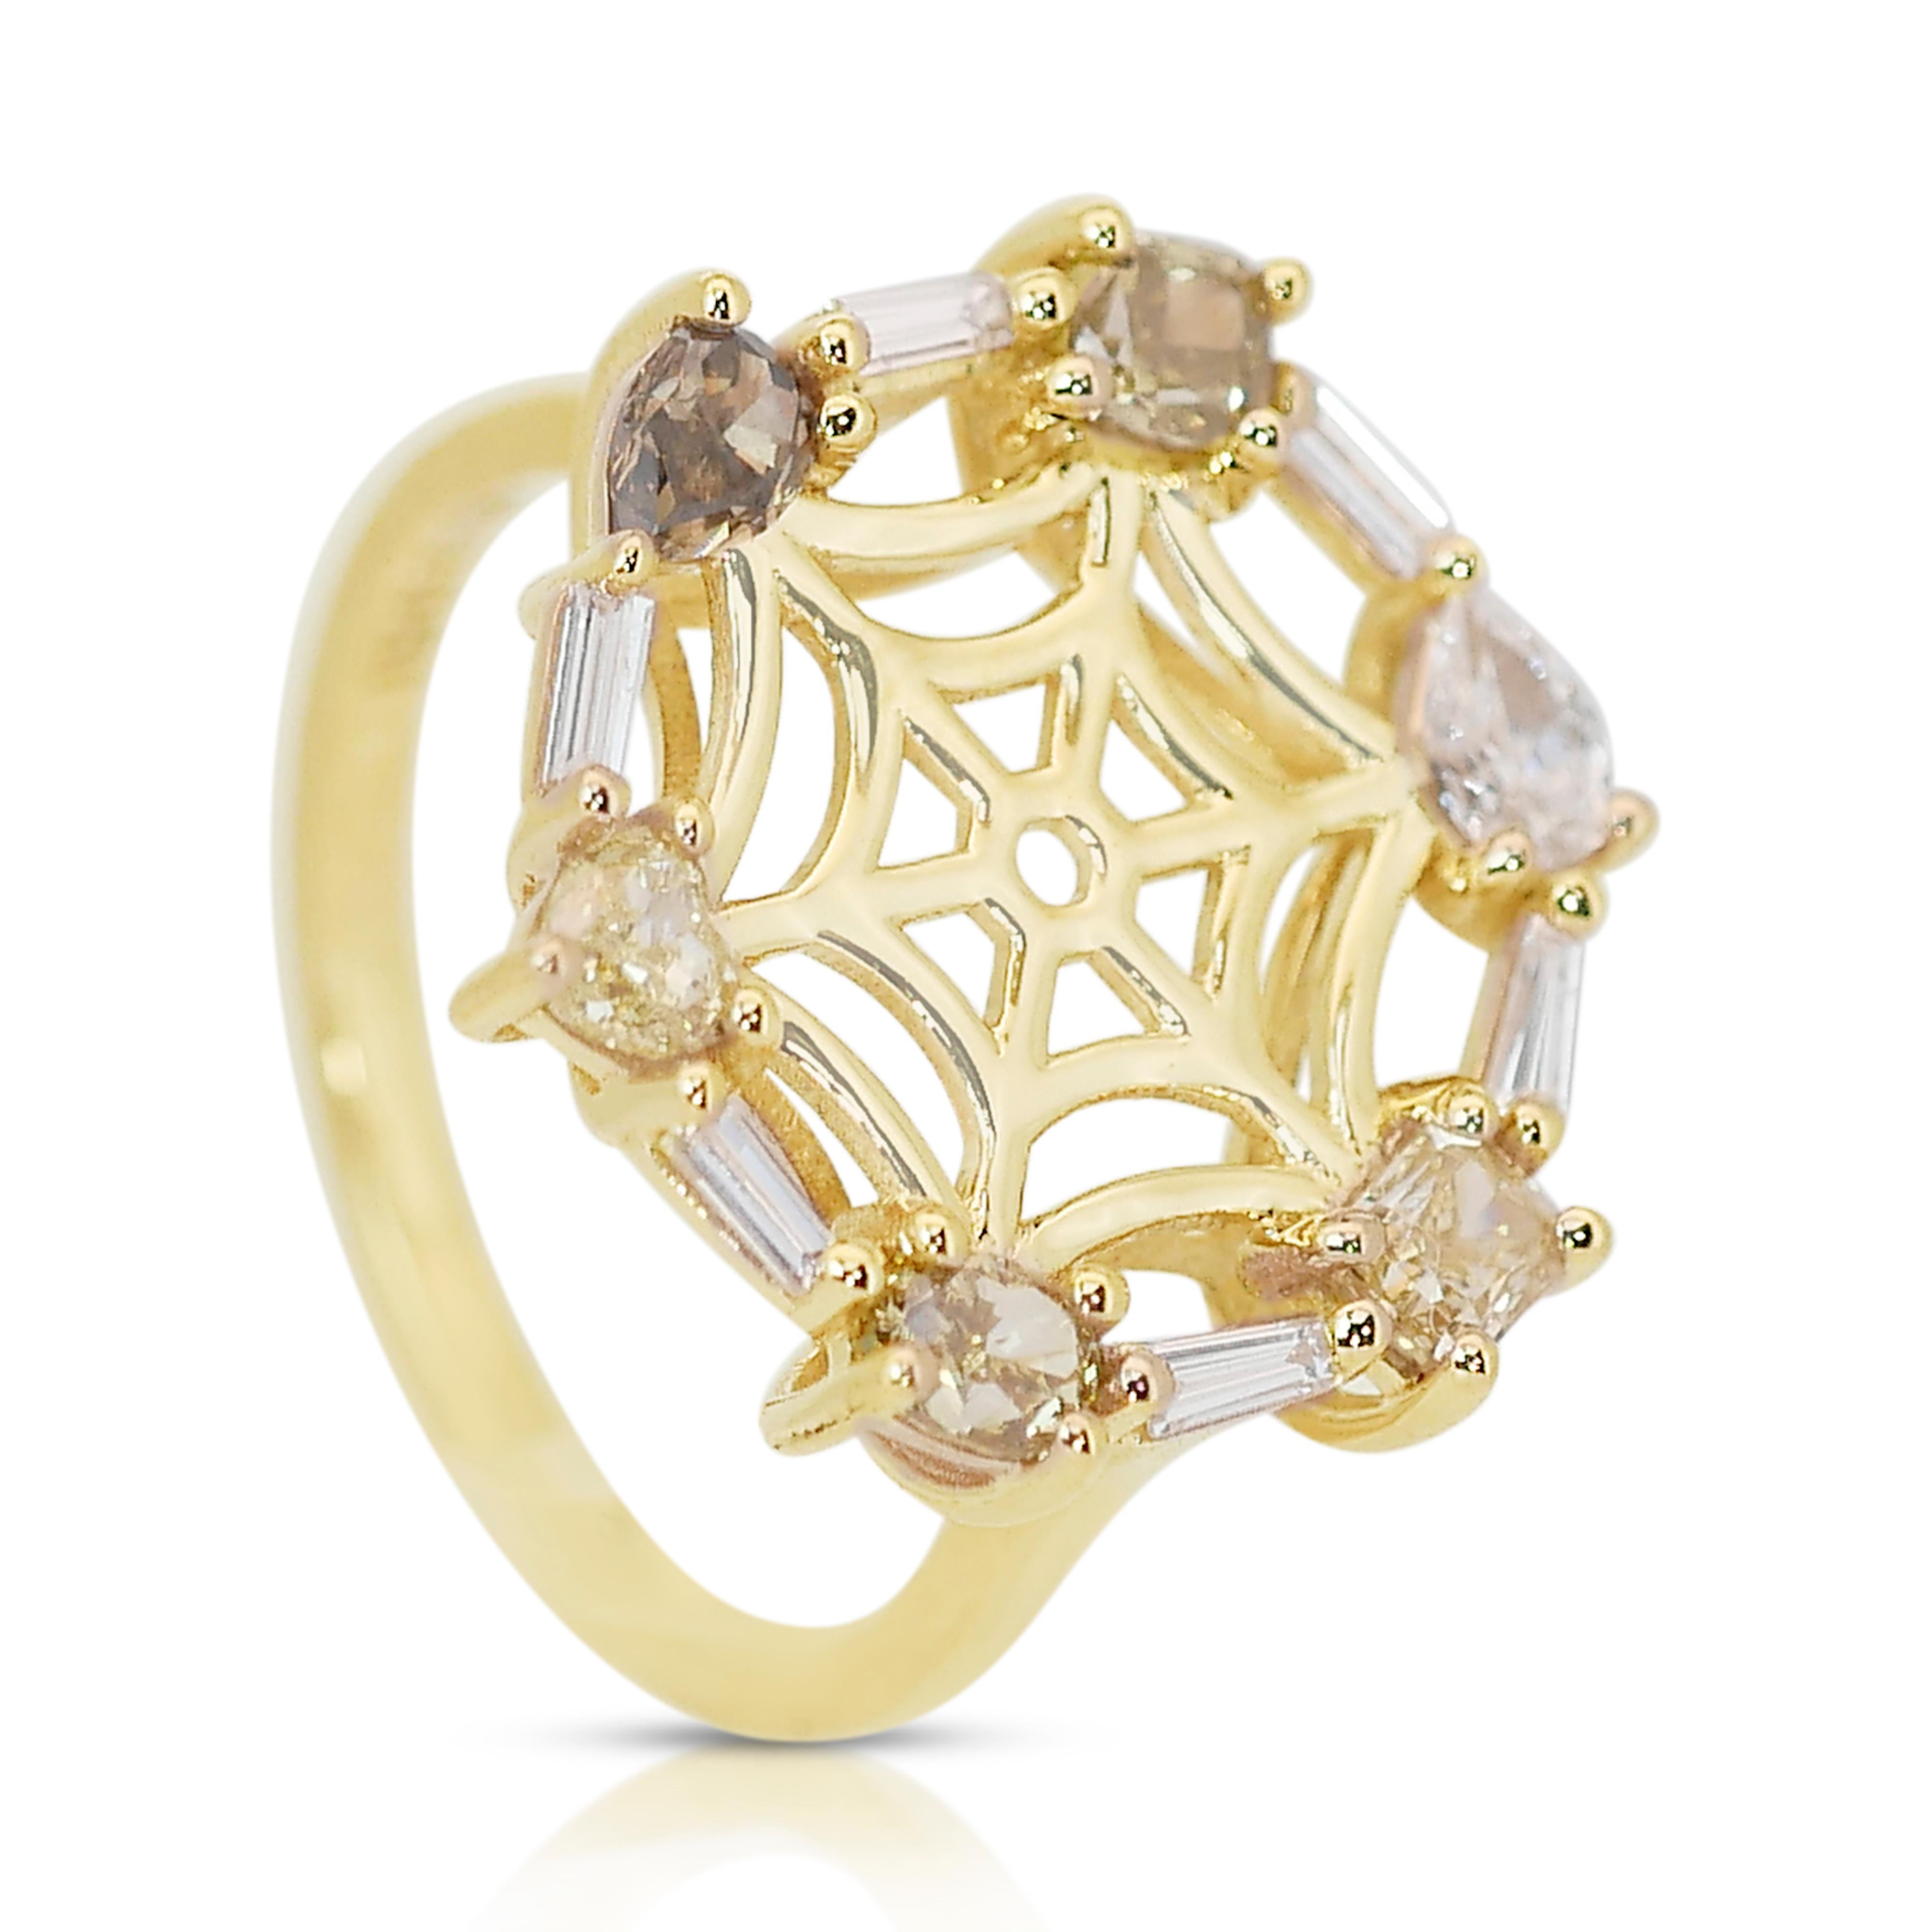 Women's Stylish 1.34ct Diamonds Fancy-Colored Ring in 18k Yellow Gold - IGI Certified